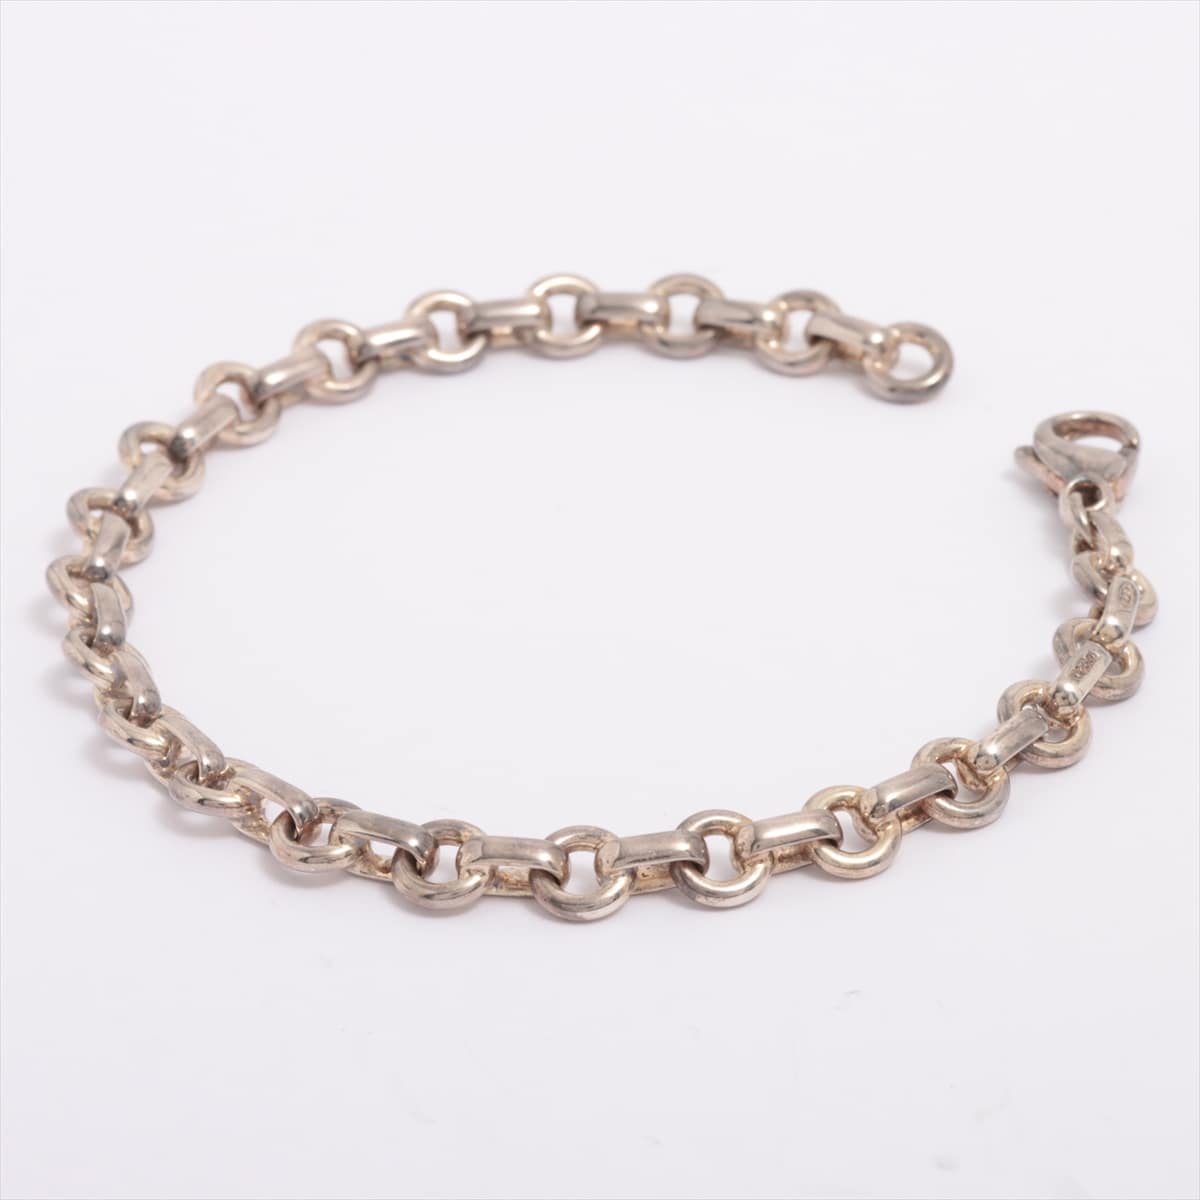 Tiffany Chain Bracelet 925 11.7g Silver